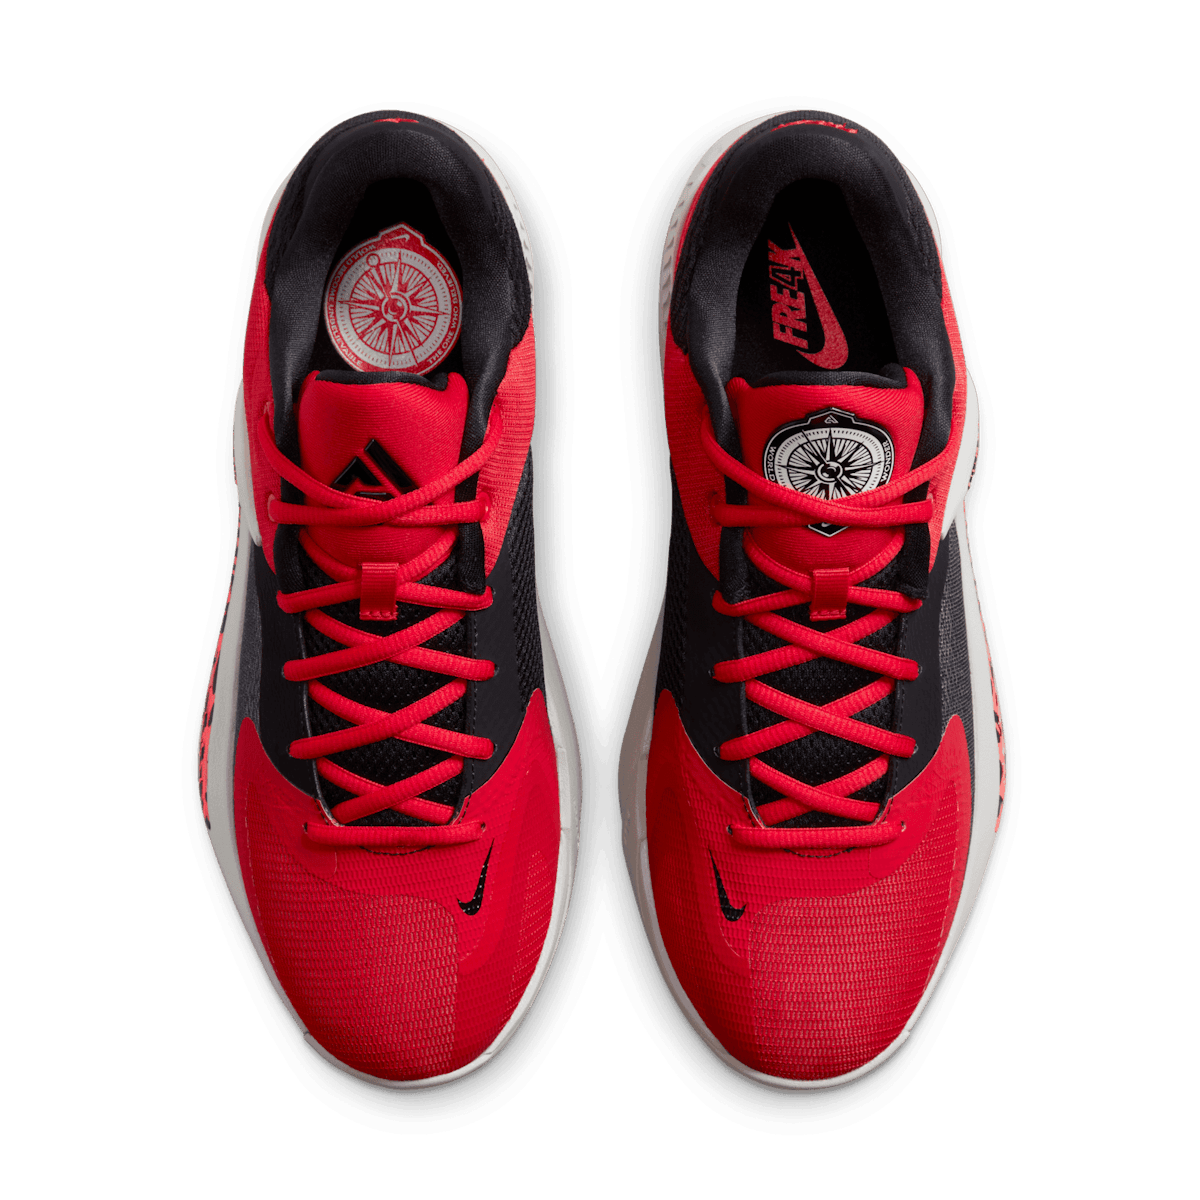 Nike Zoom Freak 4 "Safari" Basketball Shoes in Red Angle 1